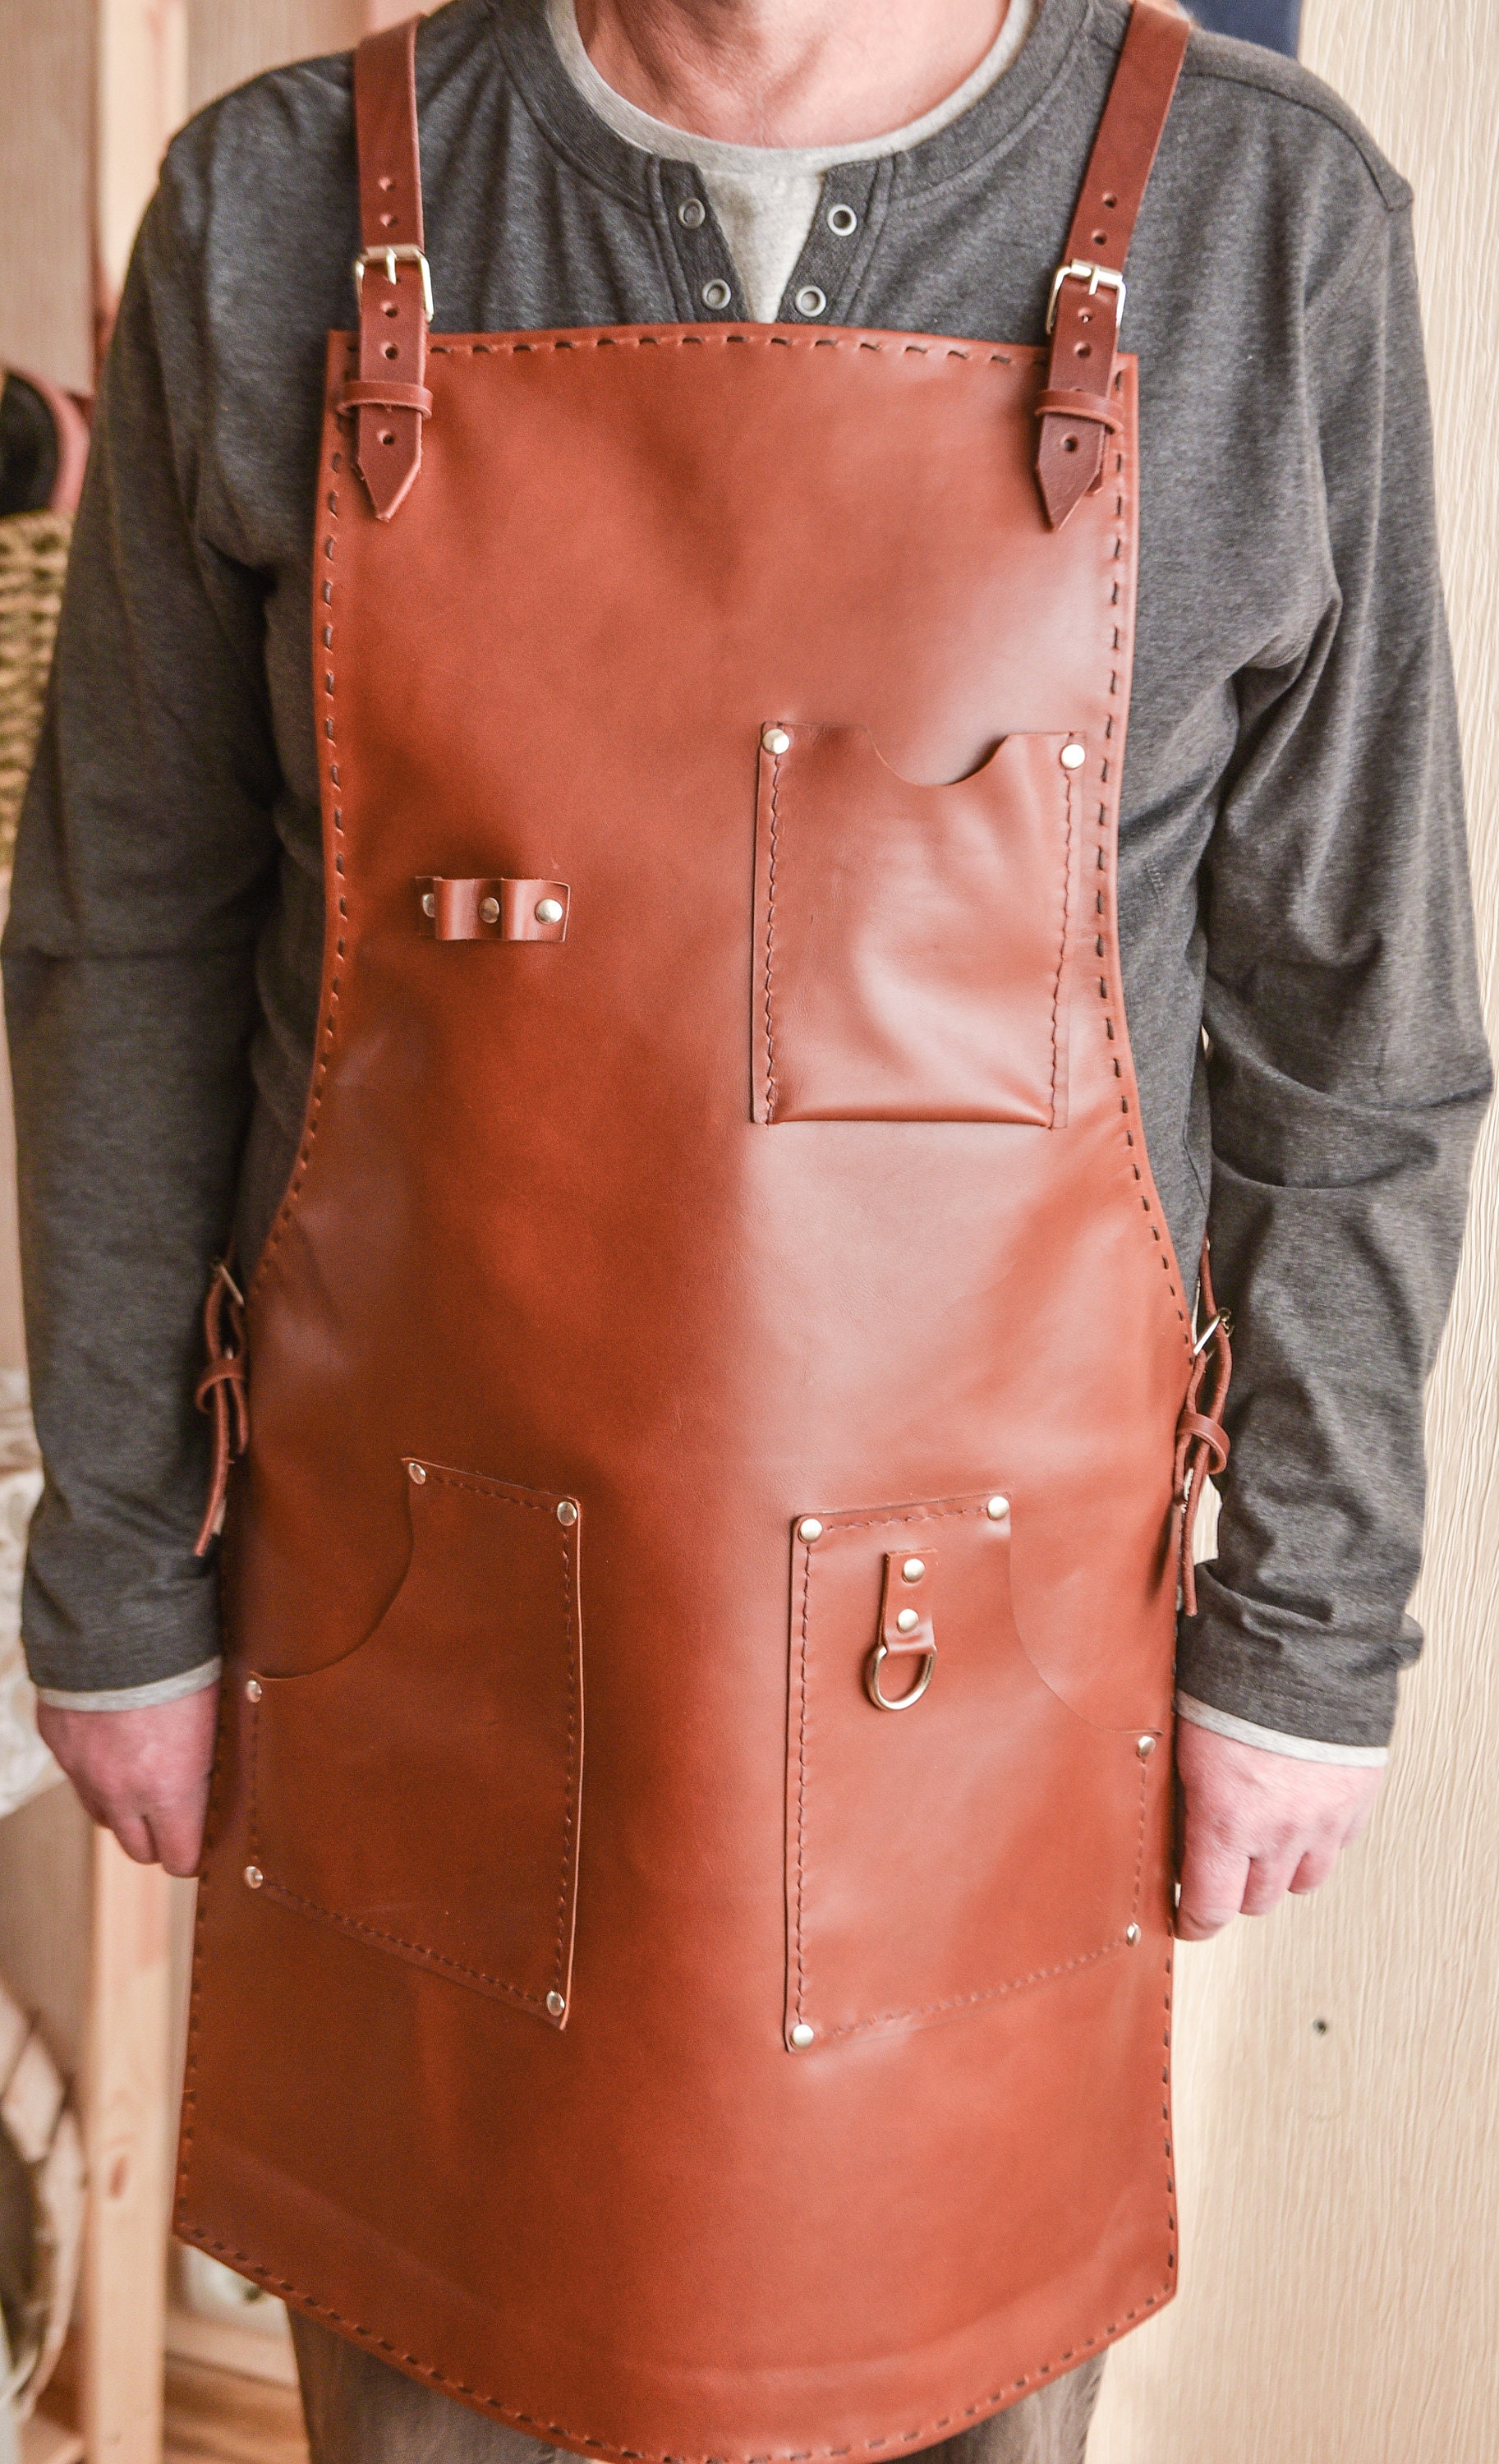 Leather Craftsman Apron Dense Leather Apron Apron for Men | Etsy